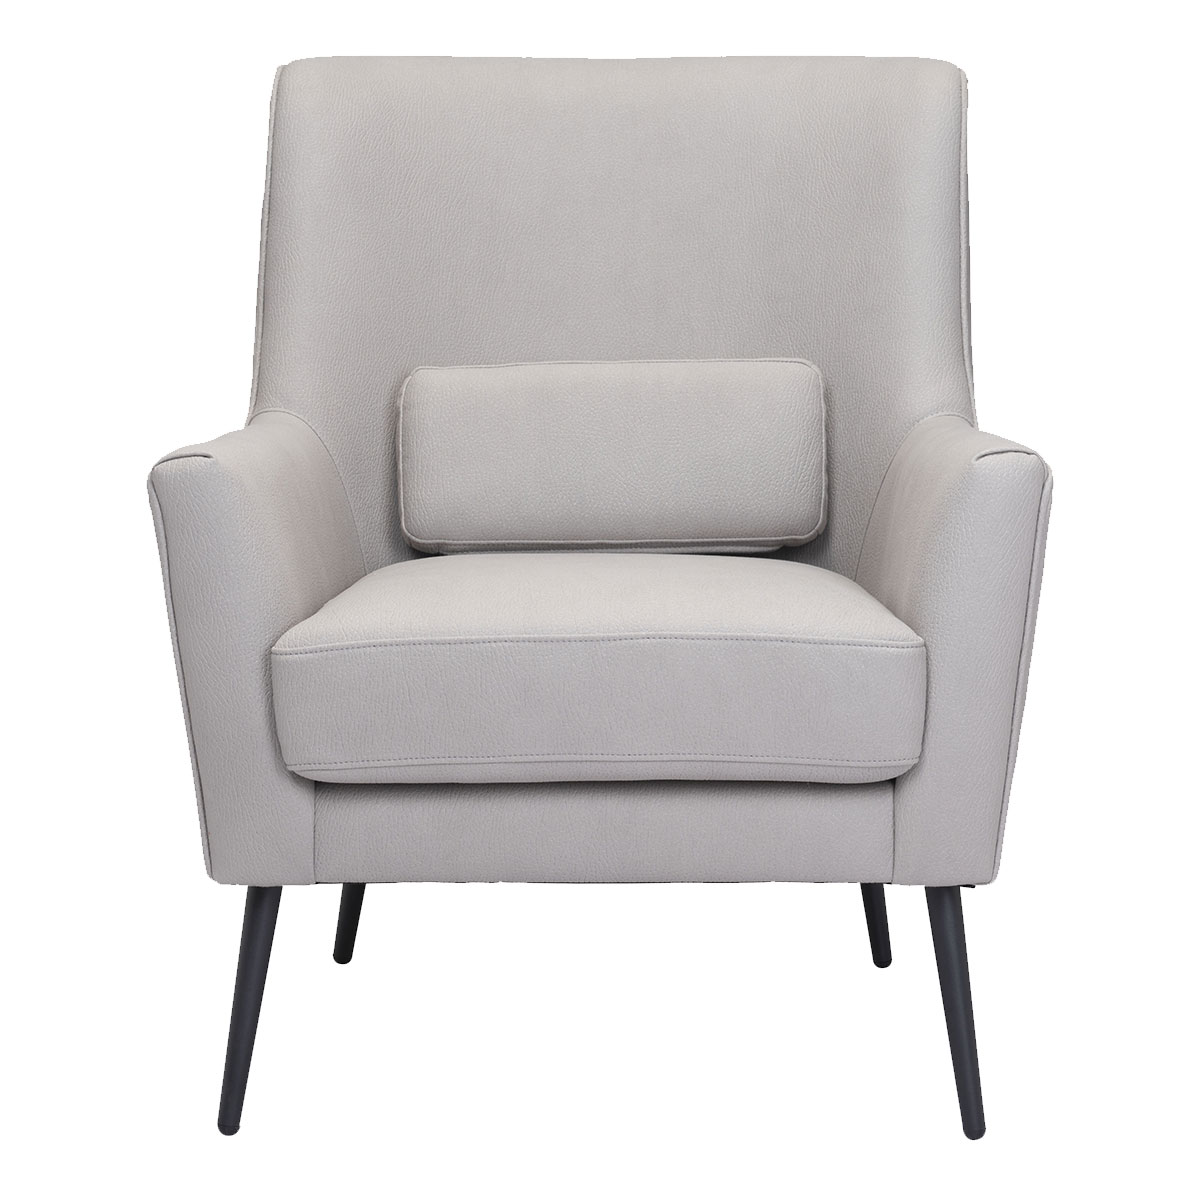 Gray Metropolitan Chair - Lounge Furniture, Lounge Chairs - Pacific ...